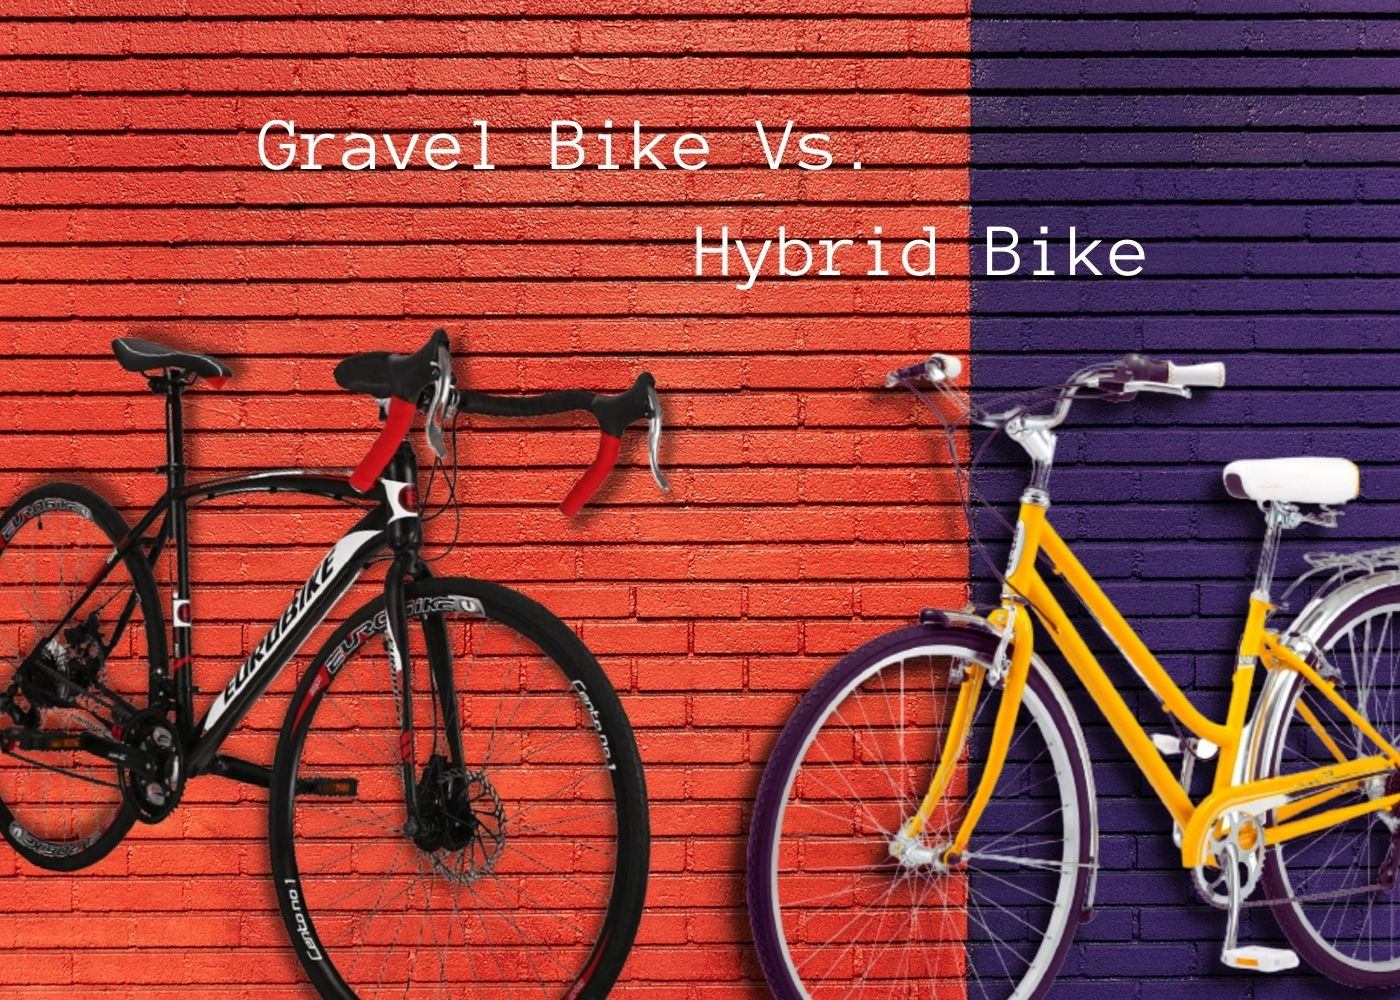 Featured image for the Gravel Bike vs. Hybrid Bike article